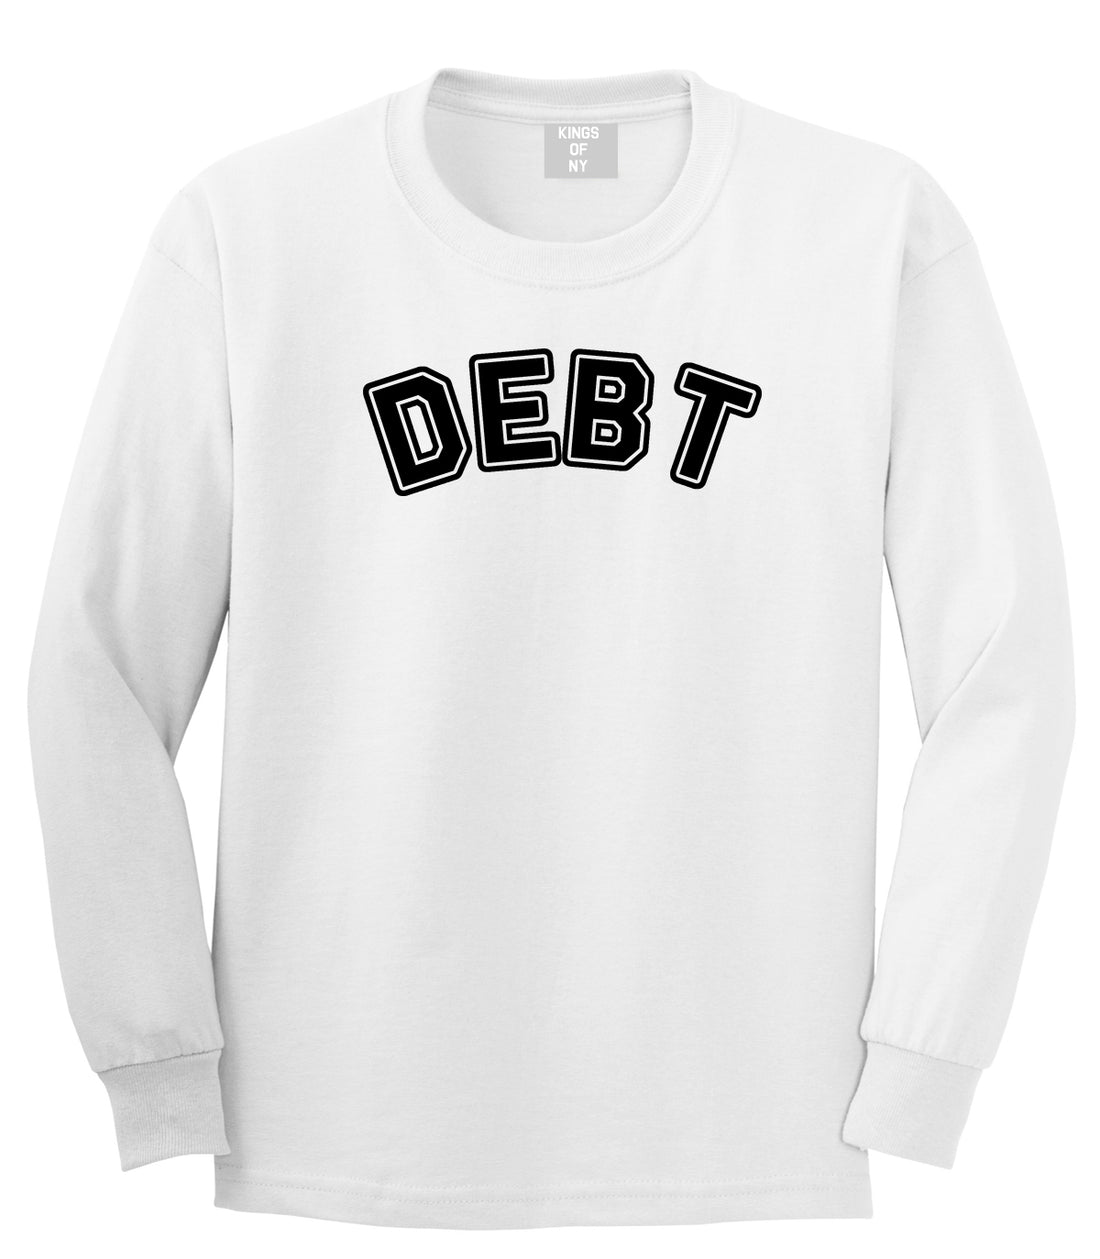 Debt Life Long Sleeve T-Shirt in White